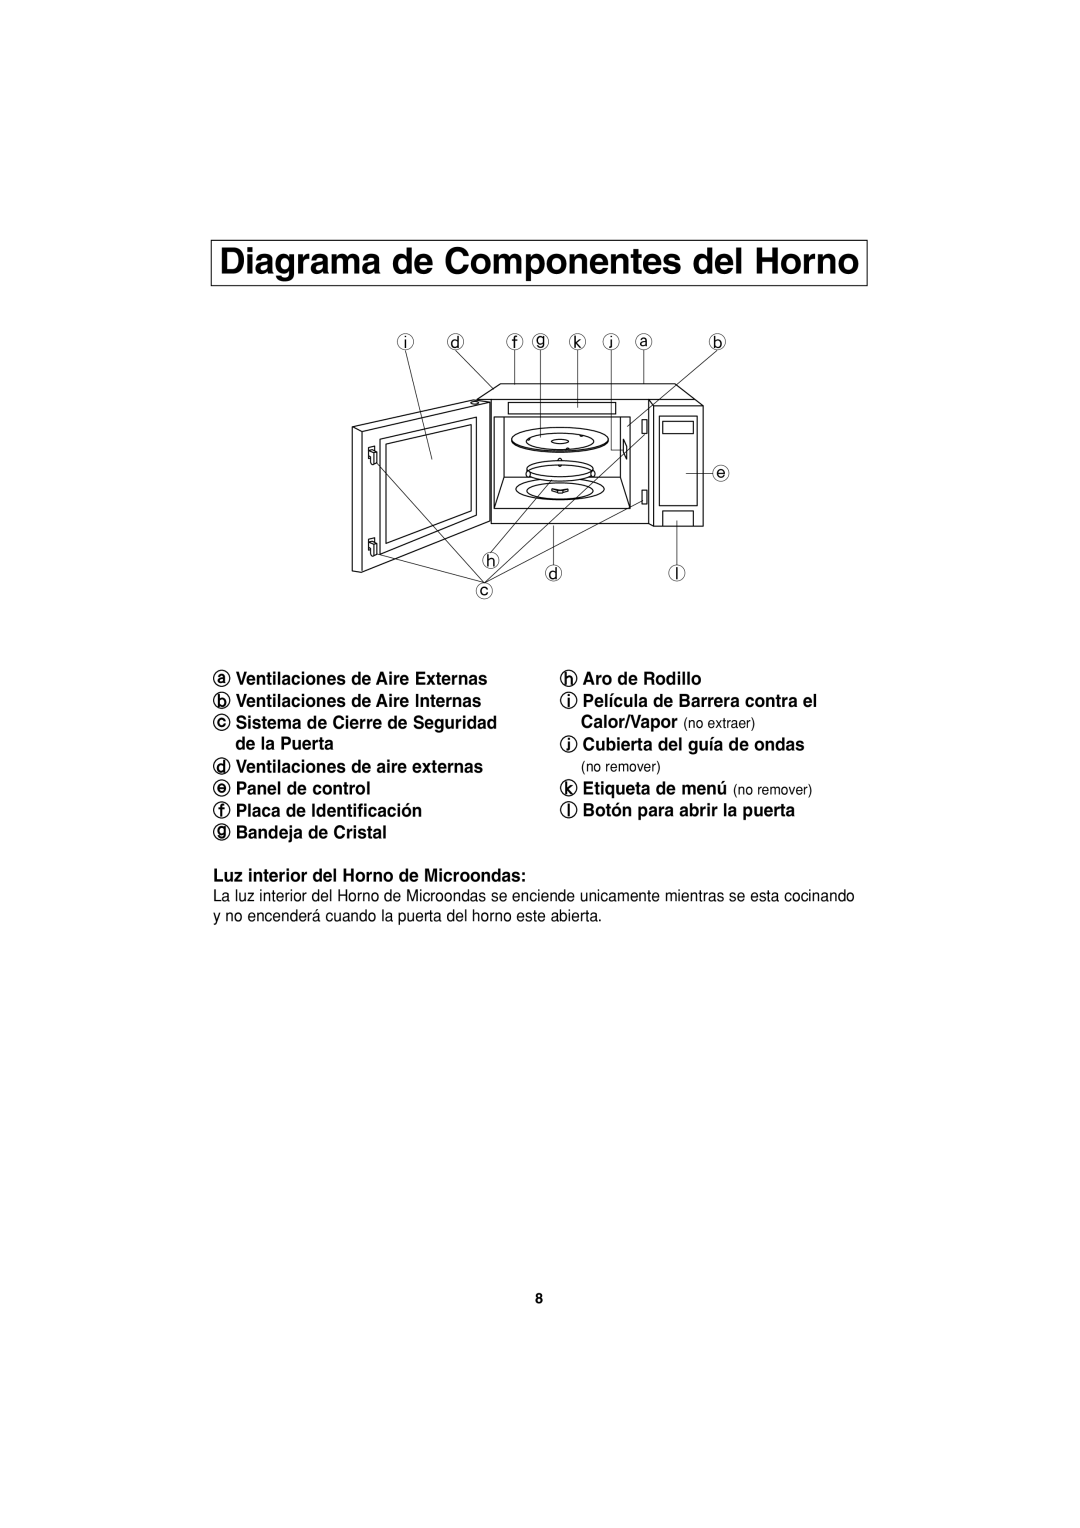 Panasonic NN-S423 important safety instructions Diagrama de Componentes del Horno 